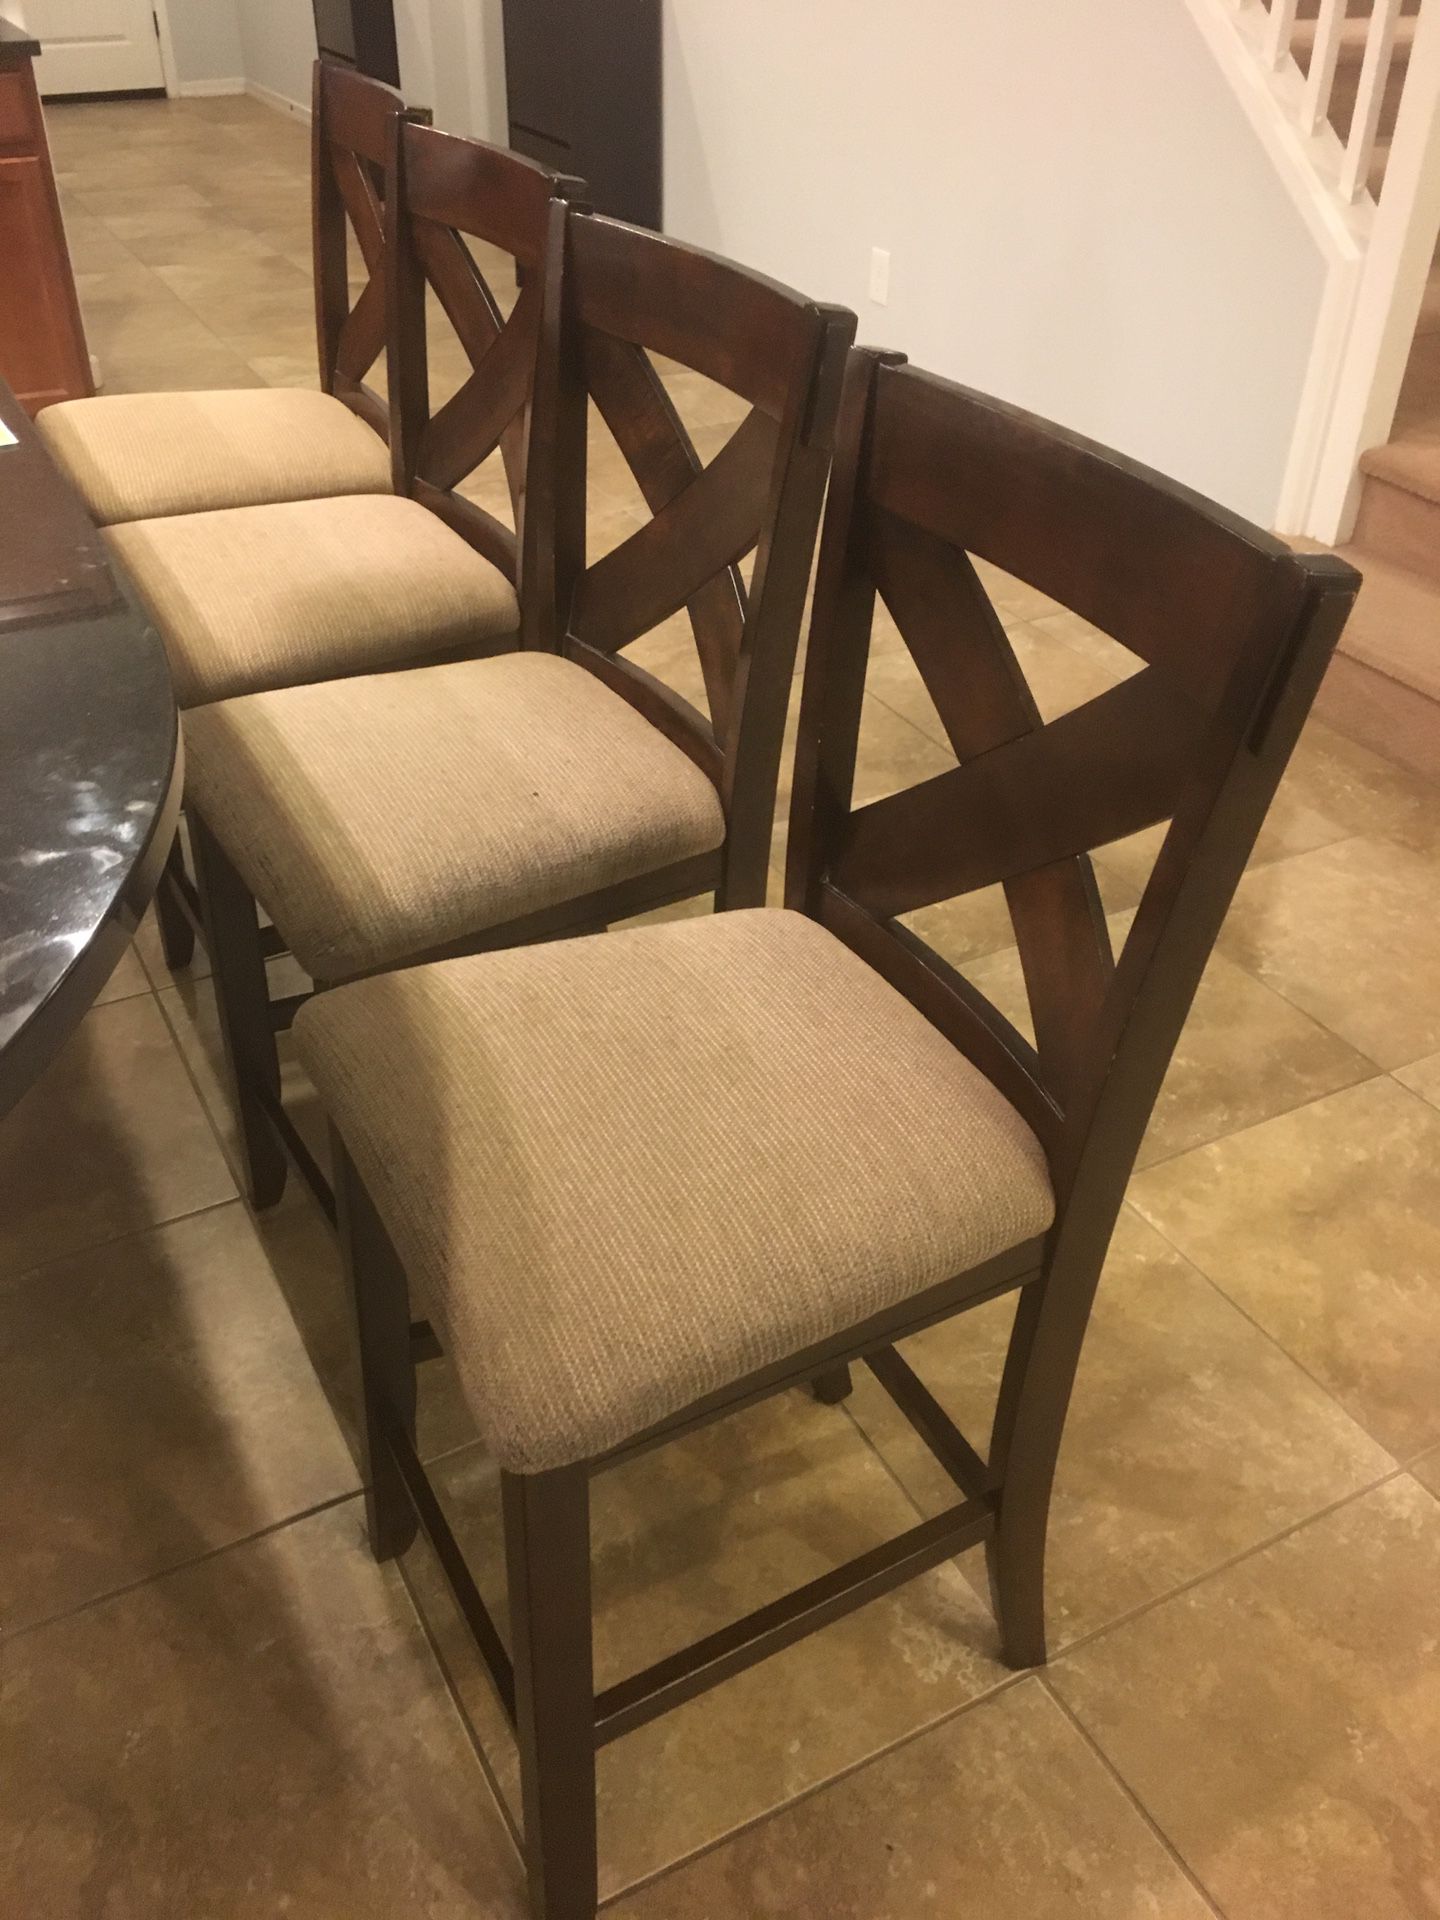 4 Barstool Chairs